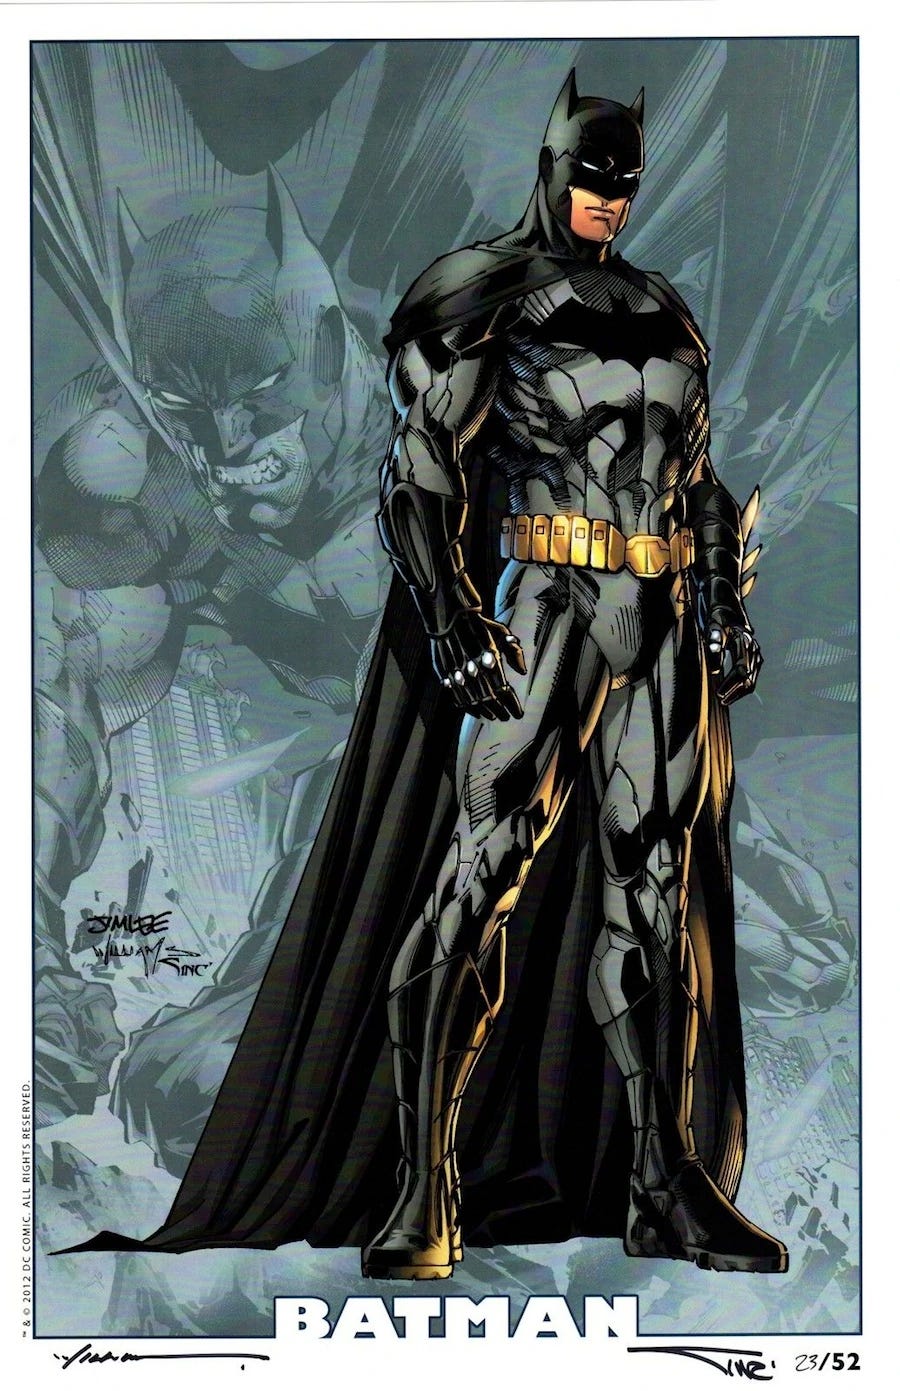 Newsletter #90: Writing the Best Batman - by Scott Snyder